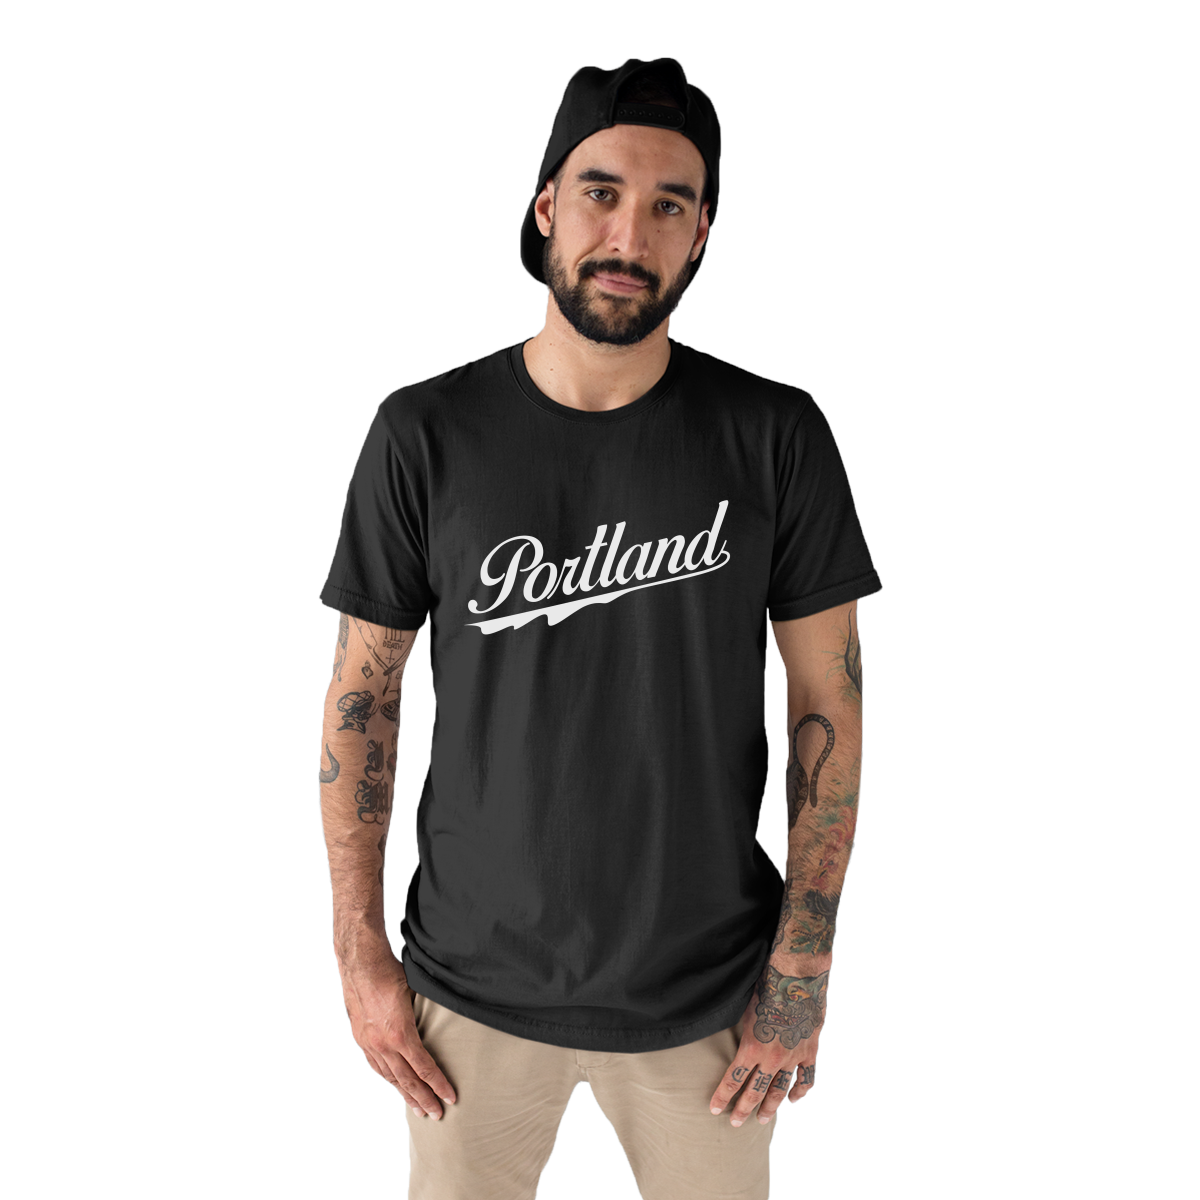 Portland Men's T-shirt | Black